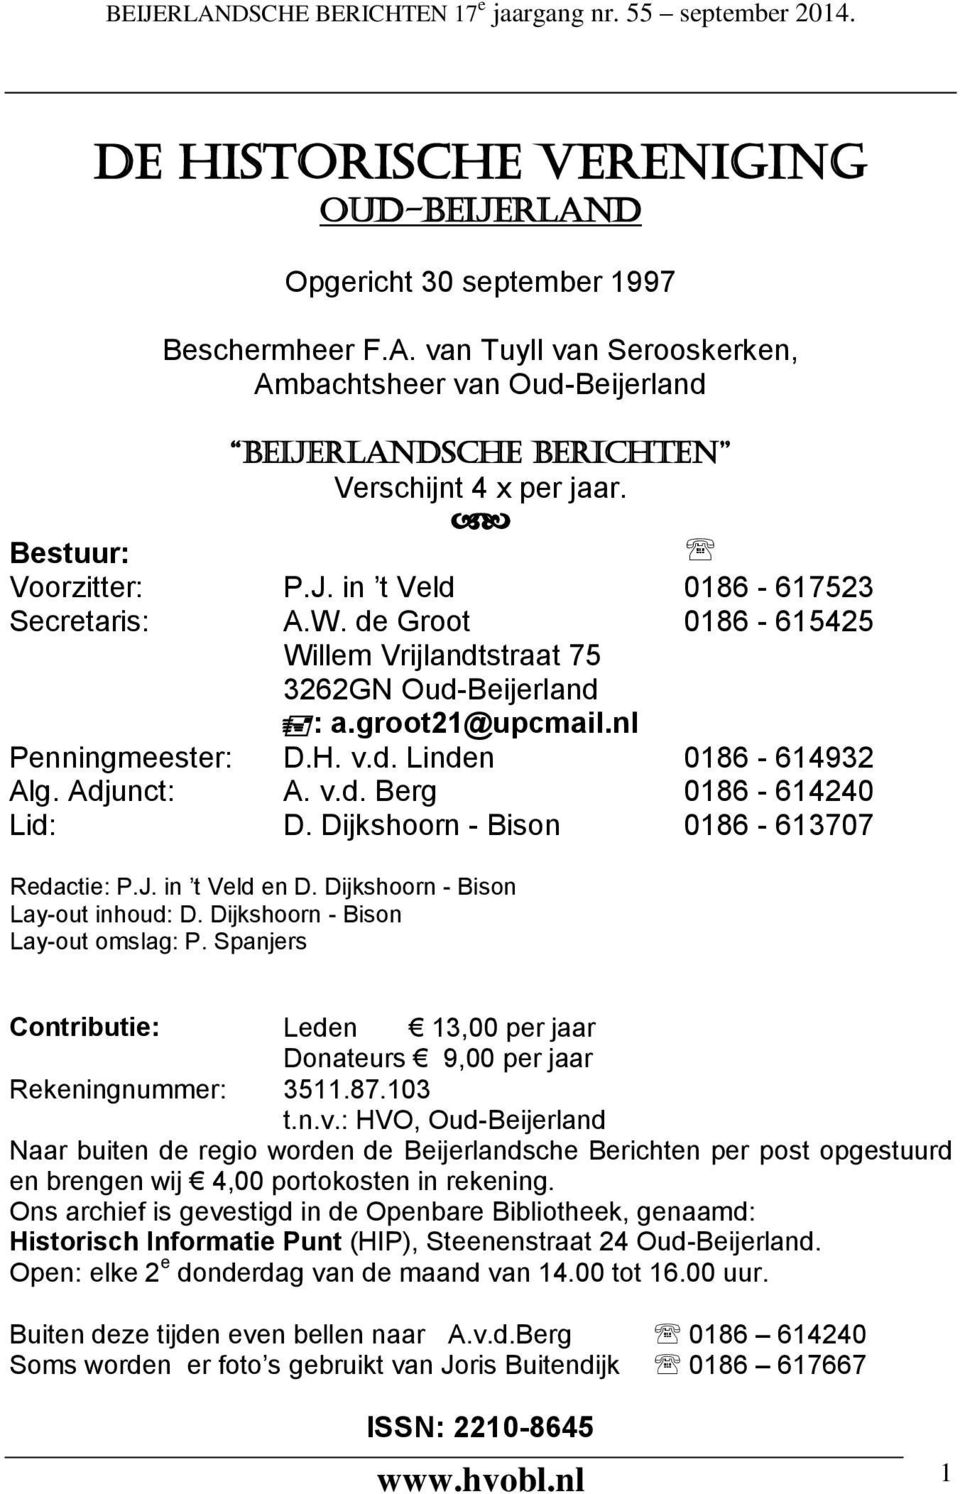 Adjunct: A. v.d. Berg 0186-614240 Lid: D. Dijkshoorn - Bison 0186-613707 Redactie: P.J. in t Veld en D. Dijkshoorn - Bison Lay-out inhoud: D. Dijkshoorn - Bison Lay-out omslag: P.